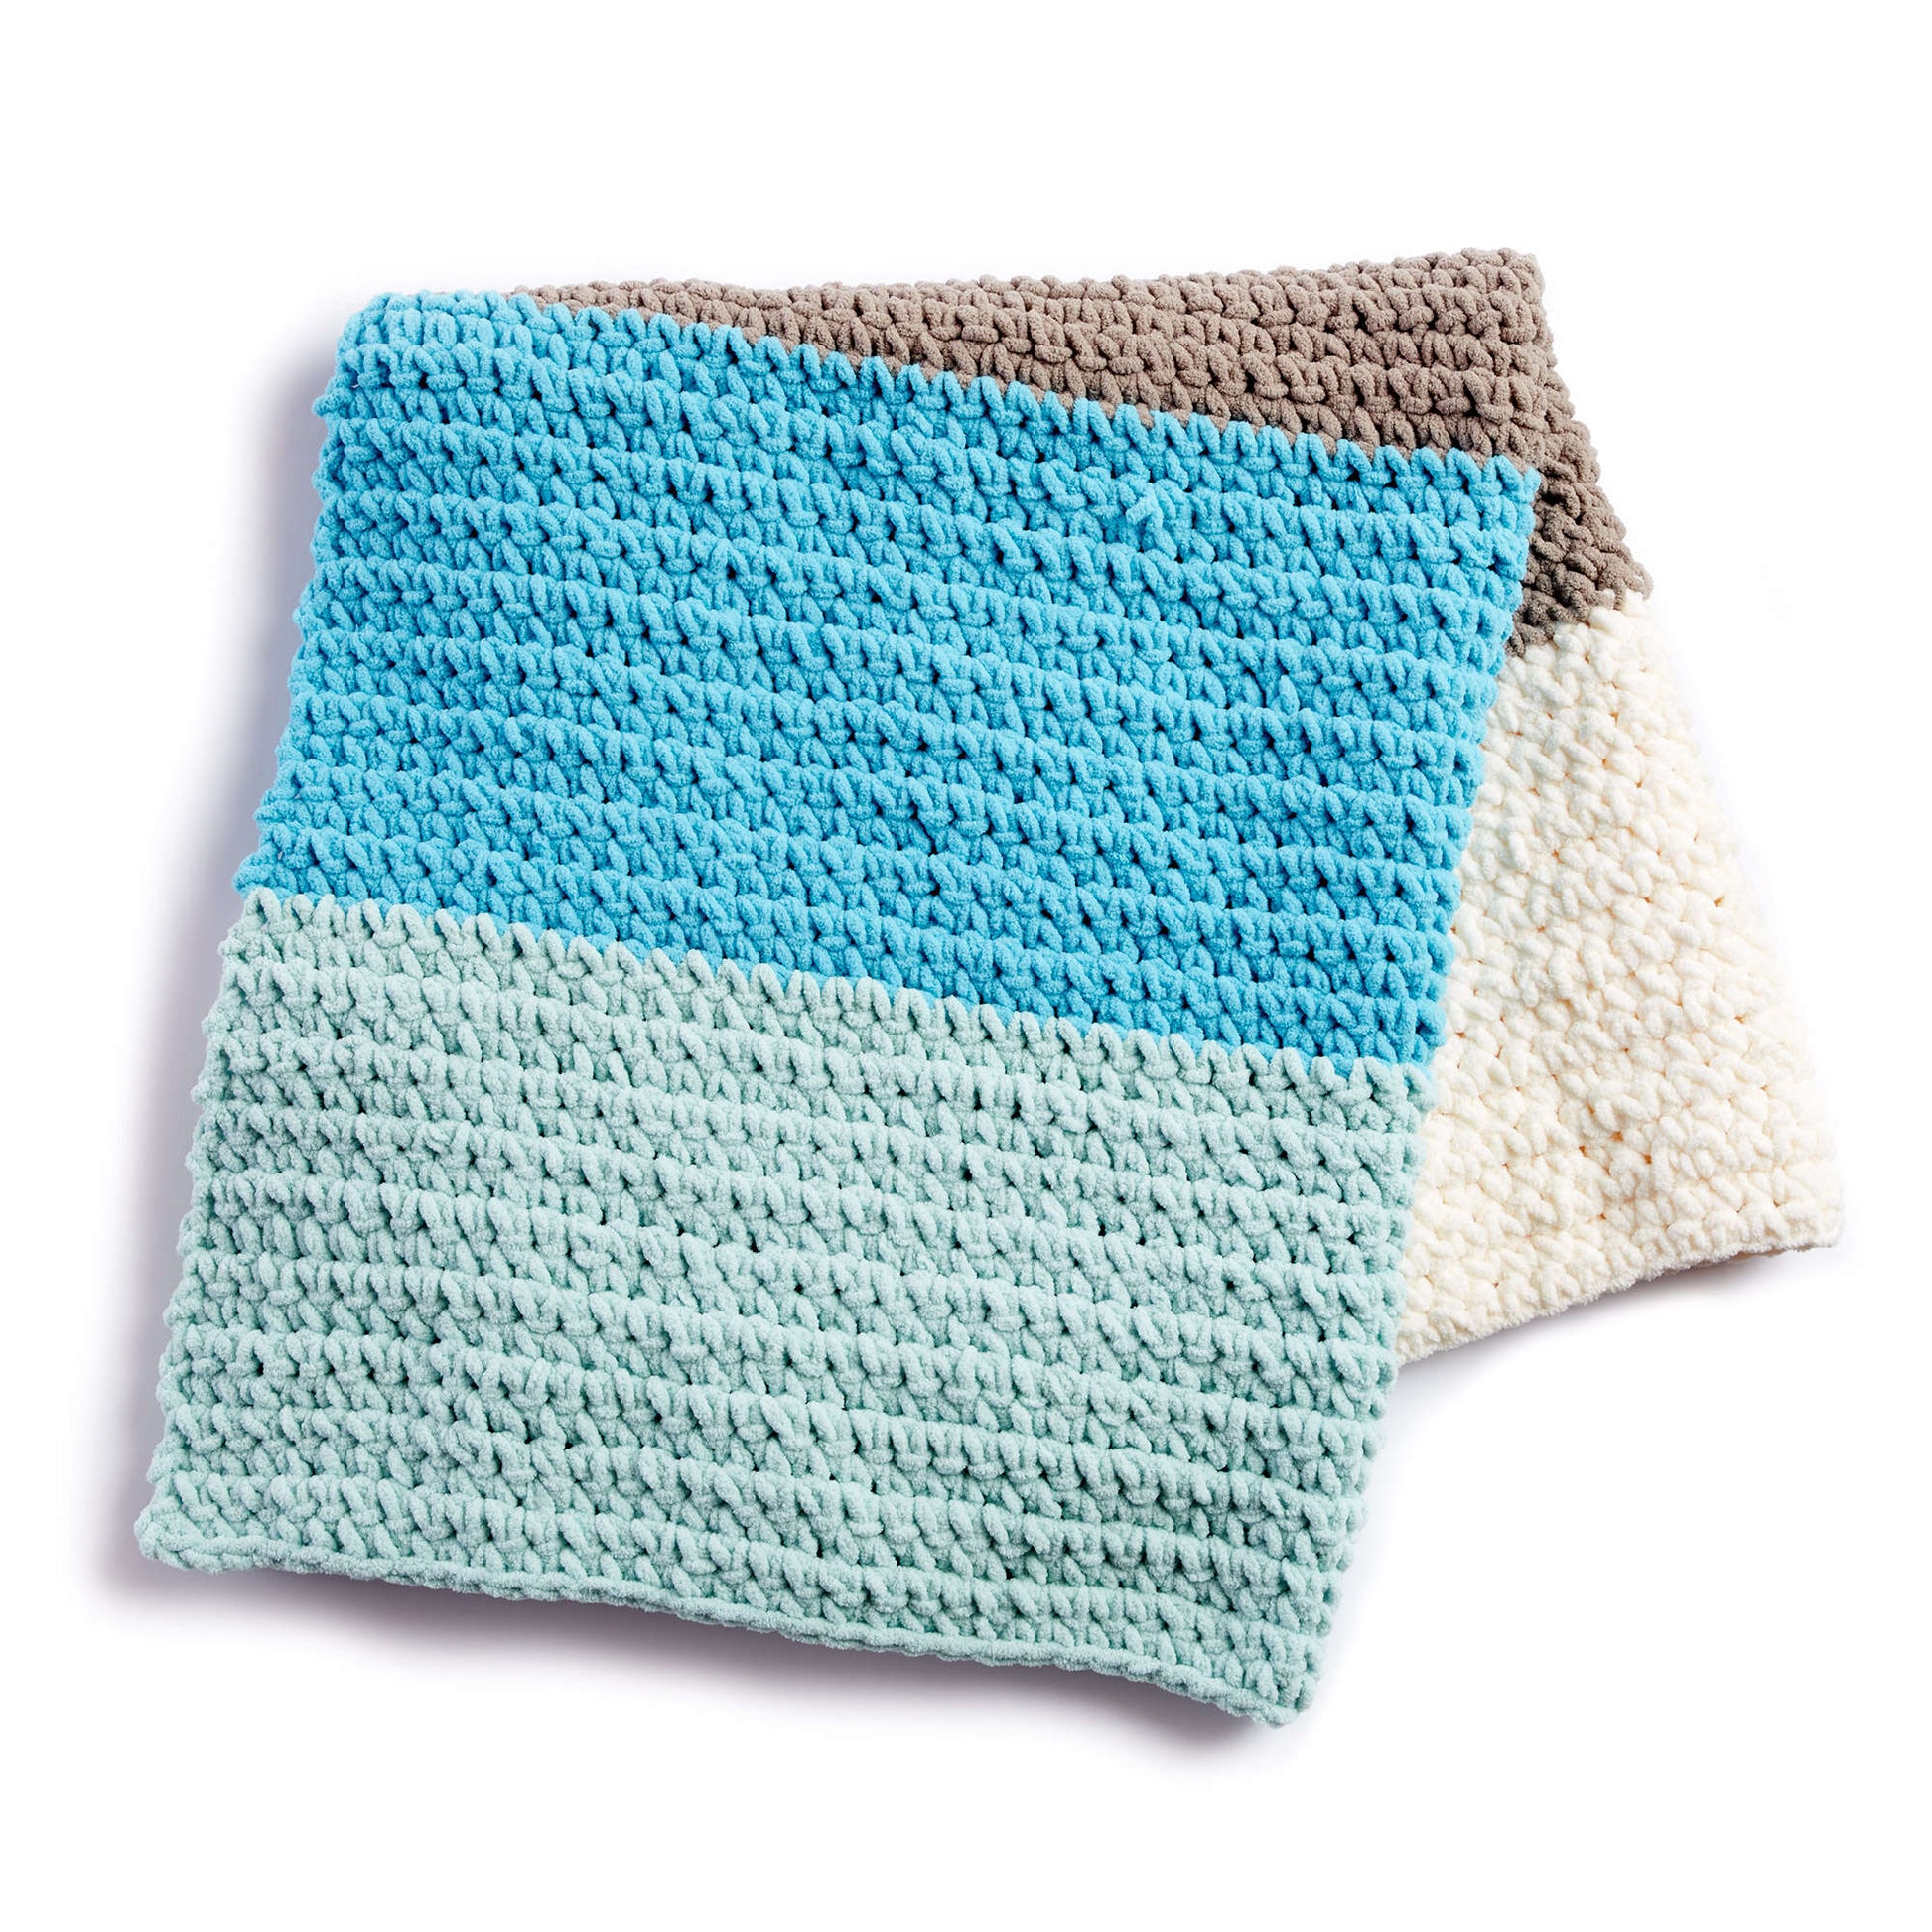 Bernat Colorblock Crochet Blanket Crochet Blanket made in Bernat Baby Blanket yarn